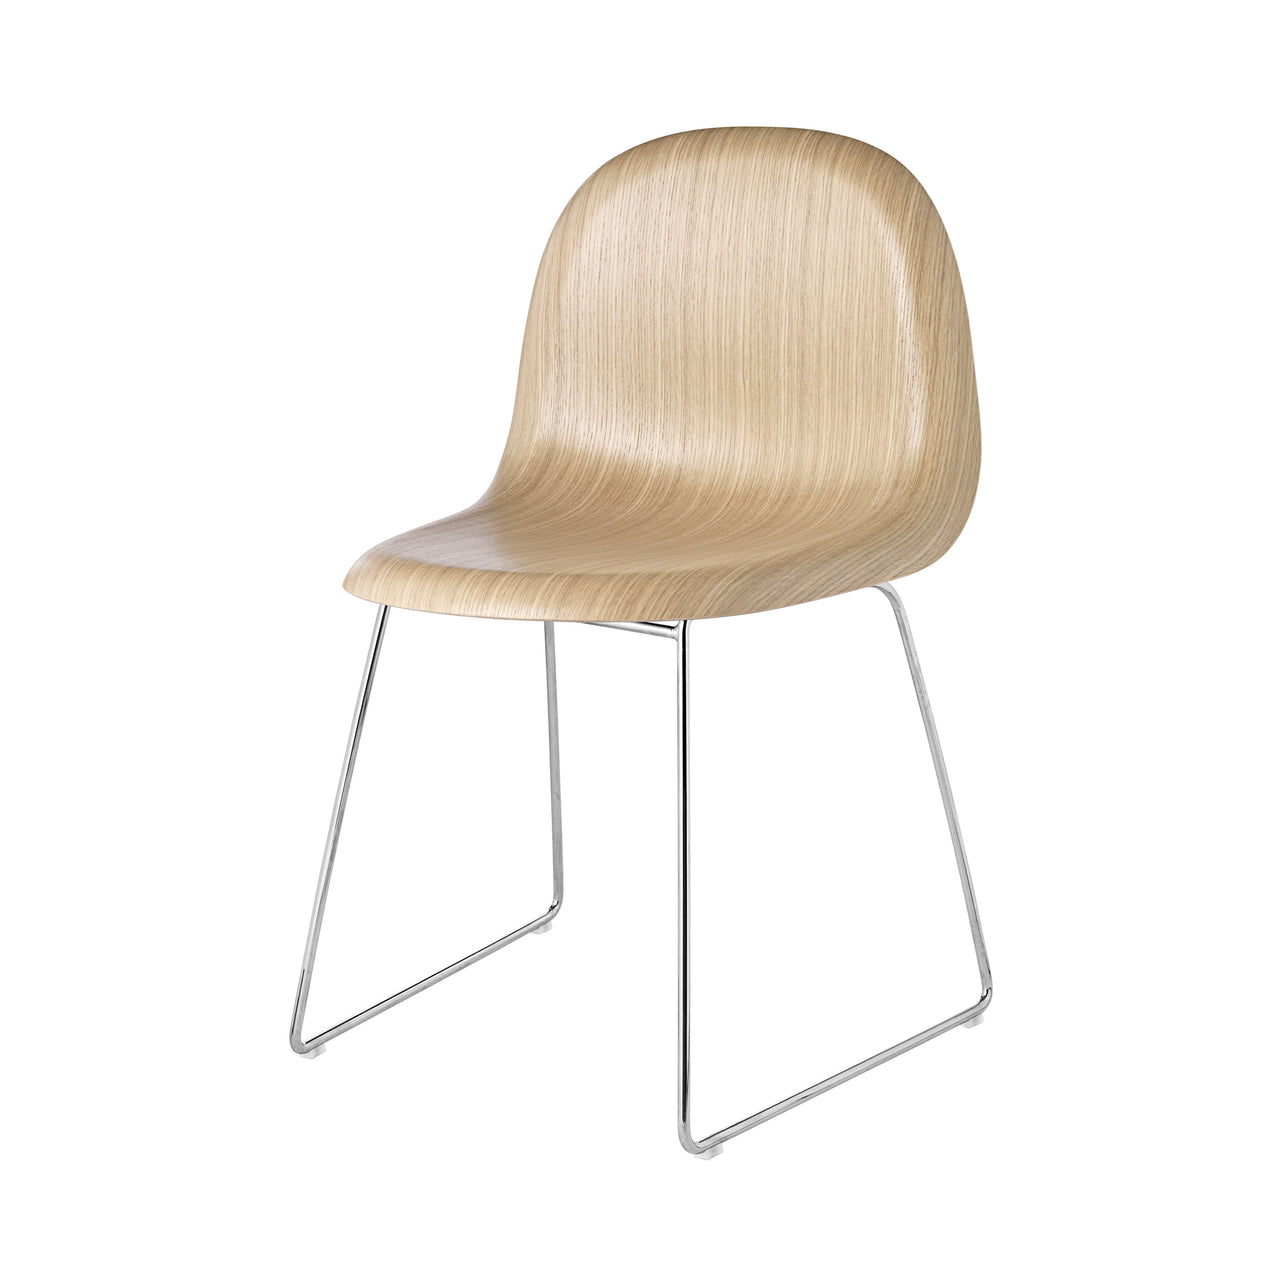 3D Dining Chair: Sledge Base + Oak + Chrome